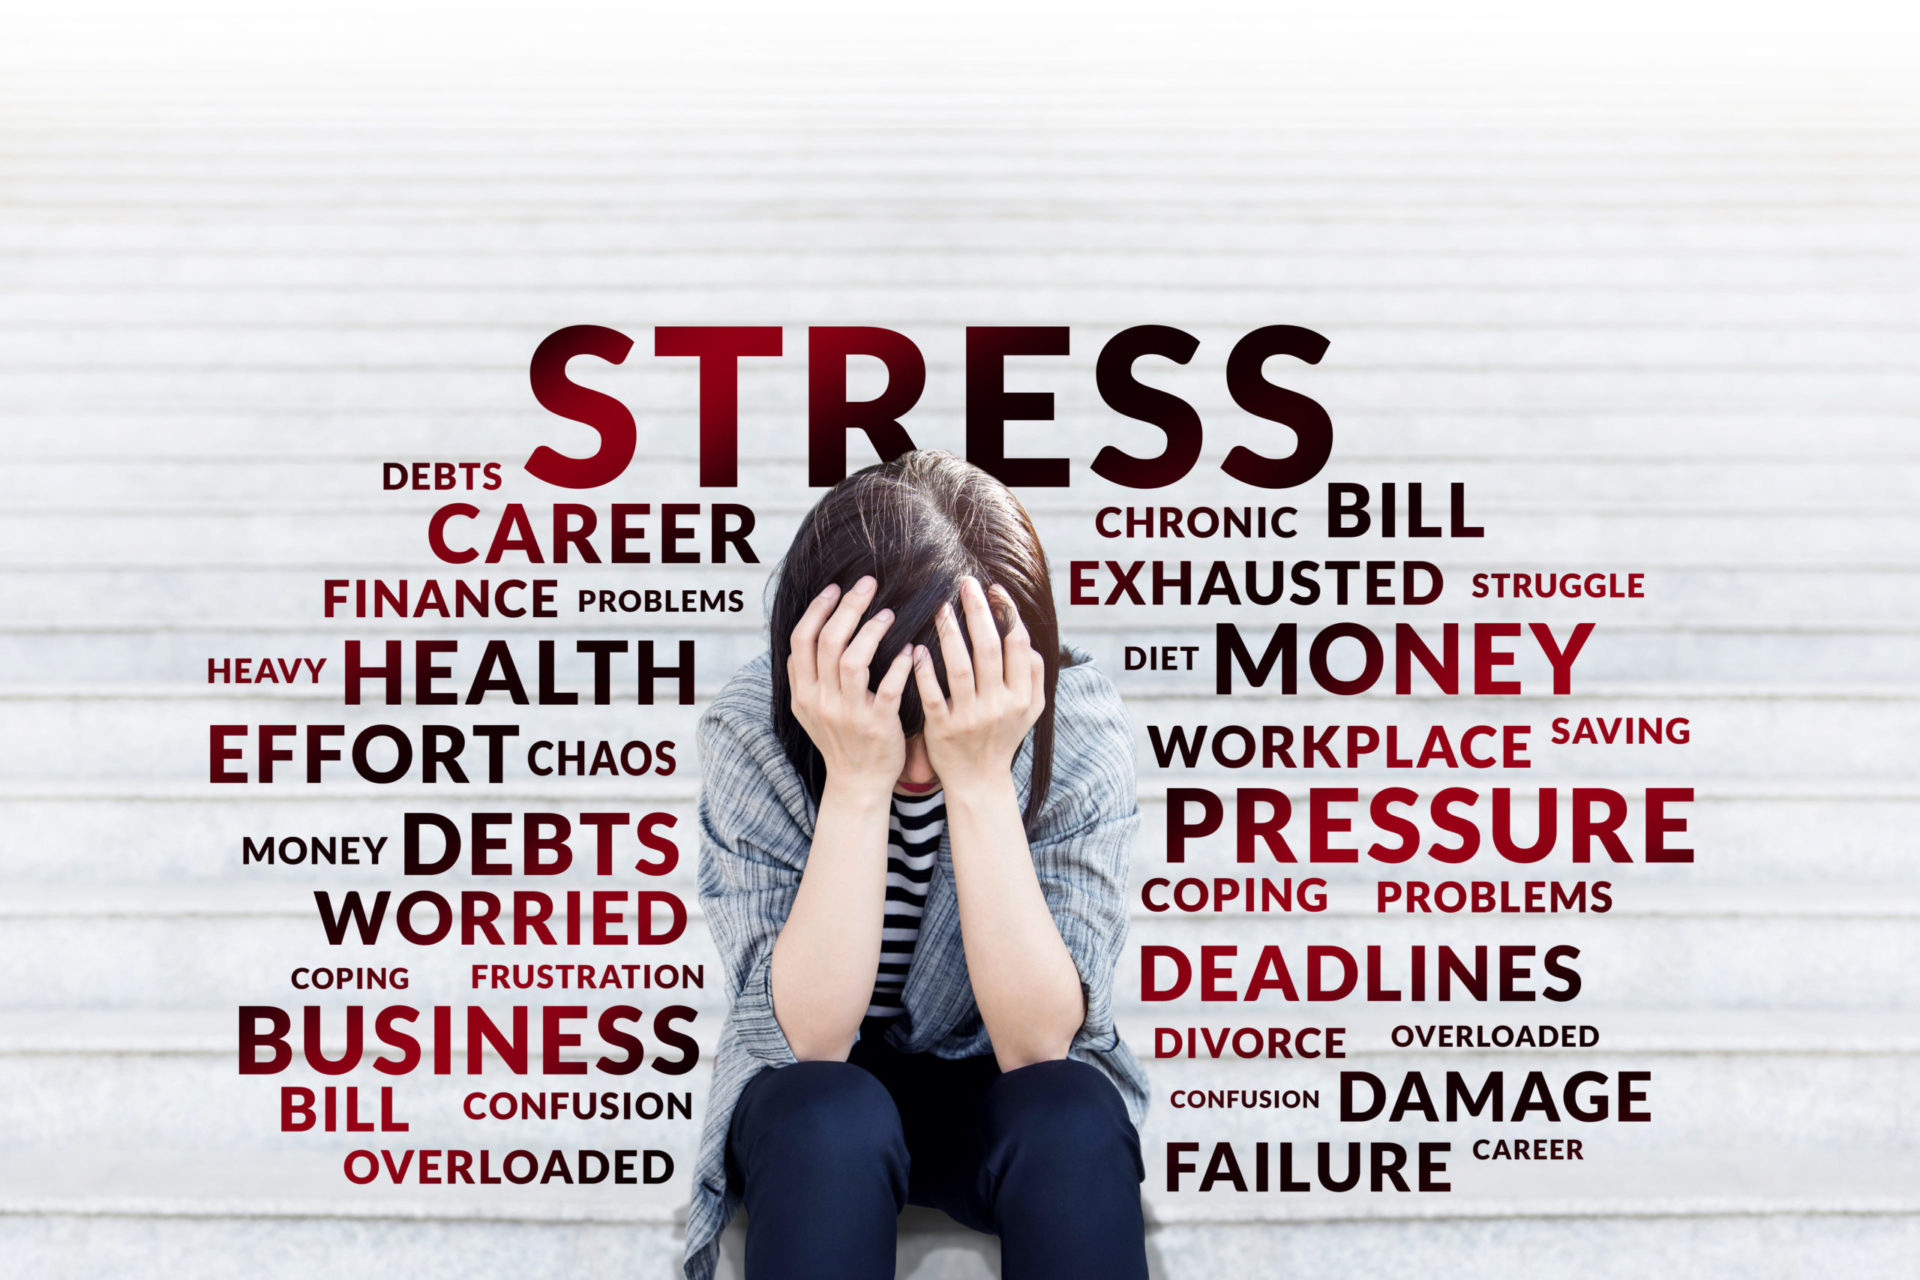 Understanding Stress